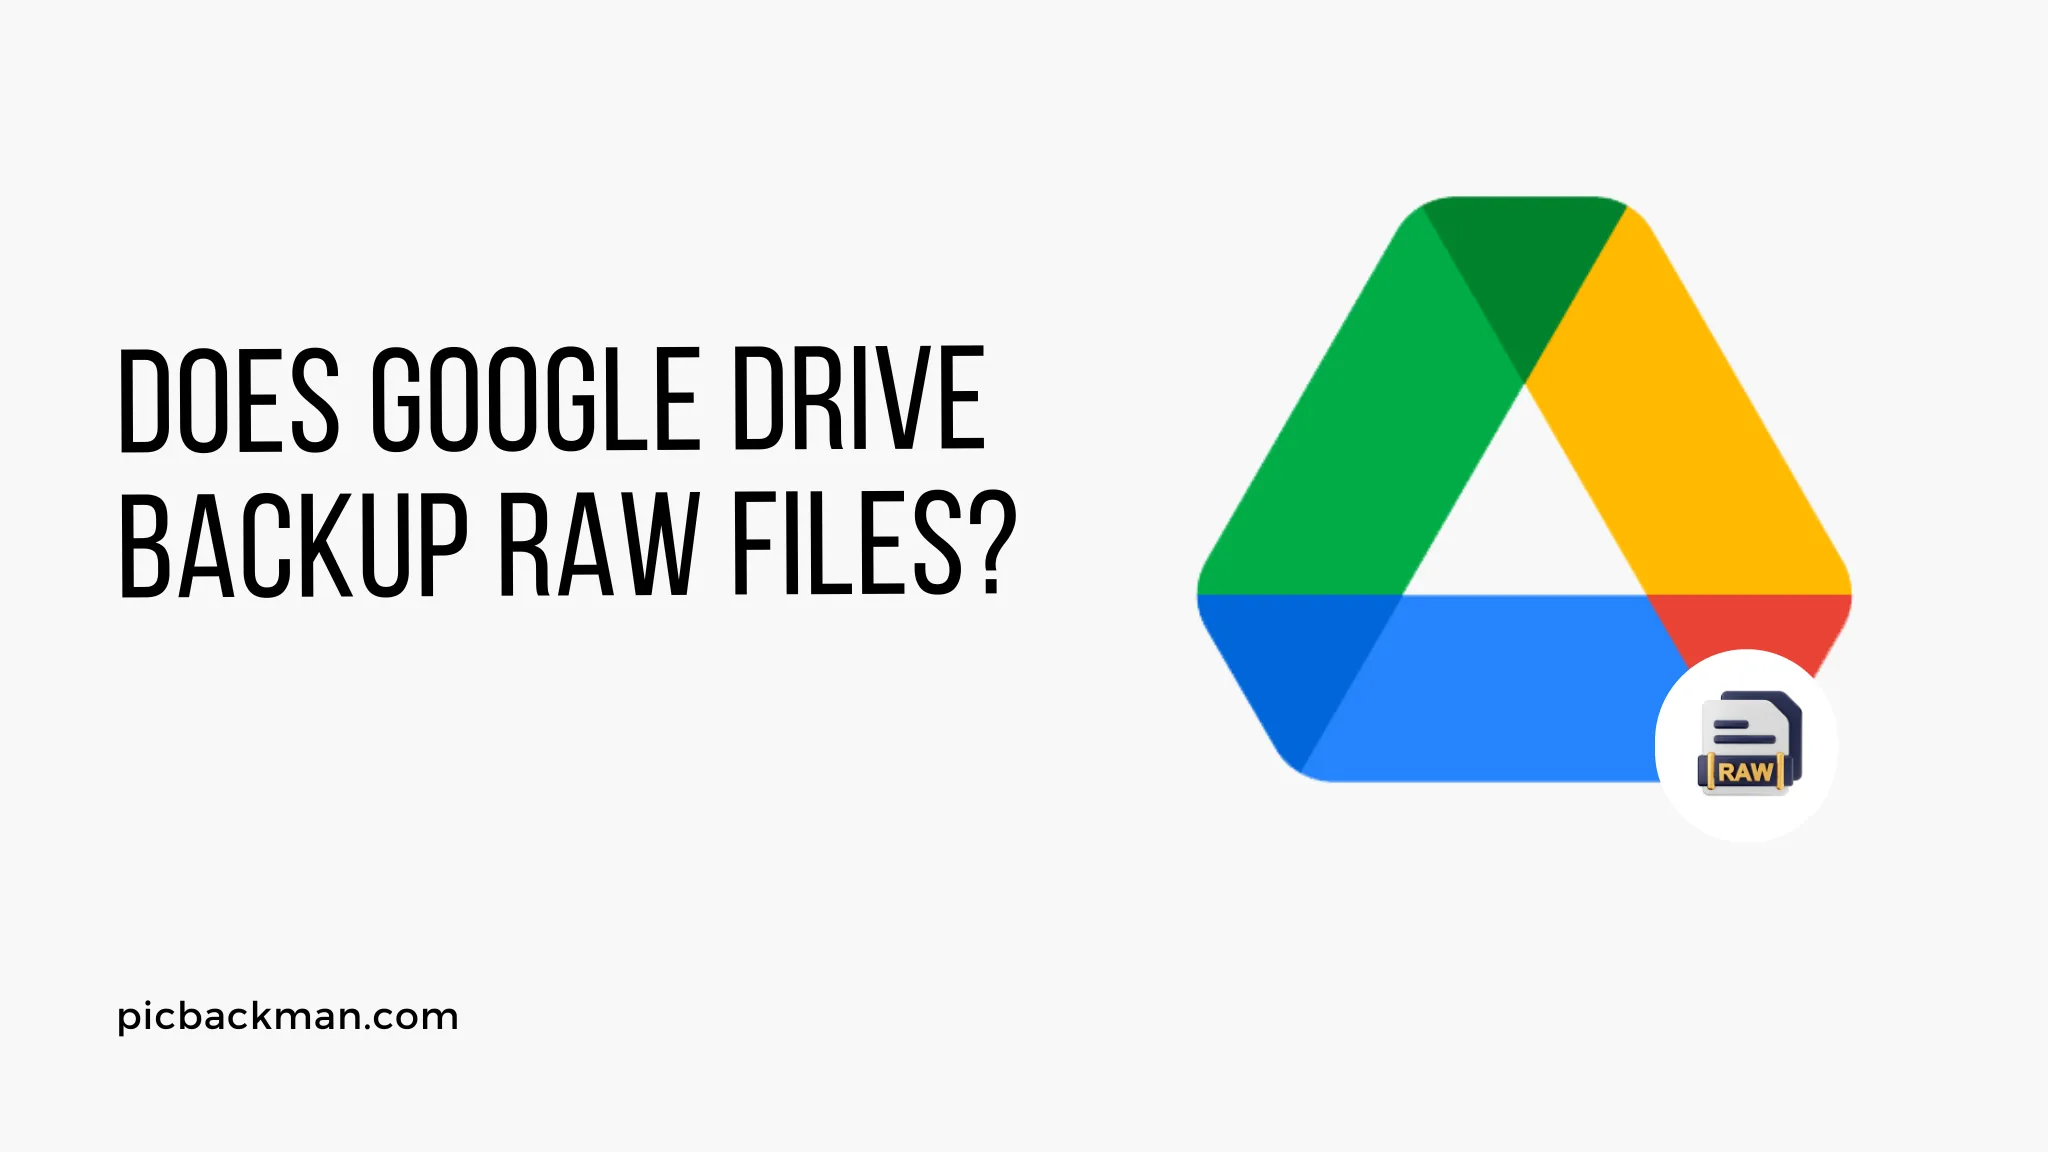 Does Google Drive Backup RAW Files?